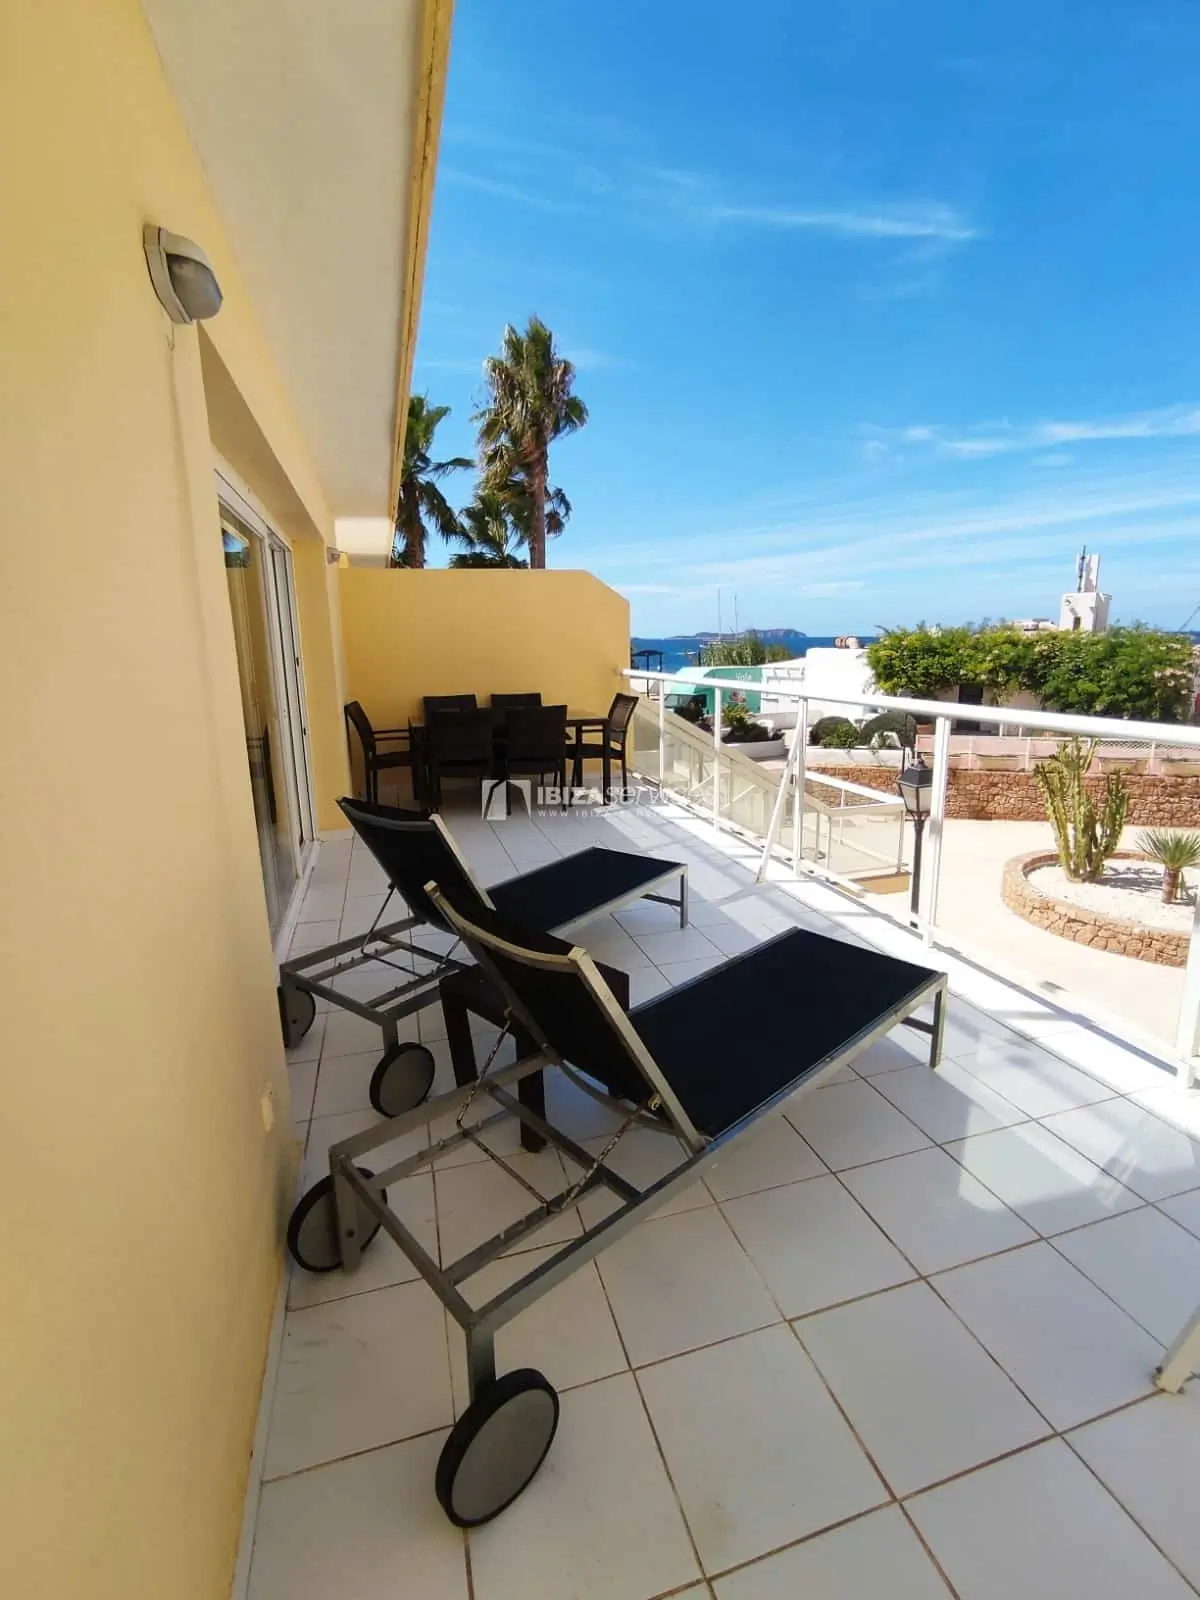 For Sale: Cozy 3-Bedroom Seaview Apartment in Ibiza